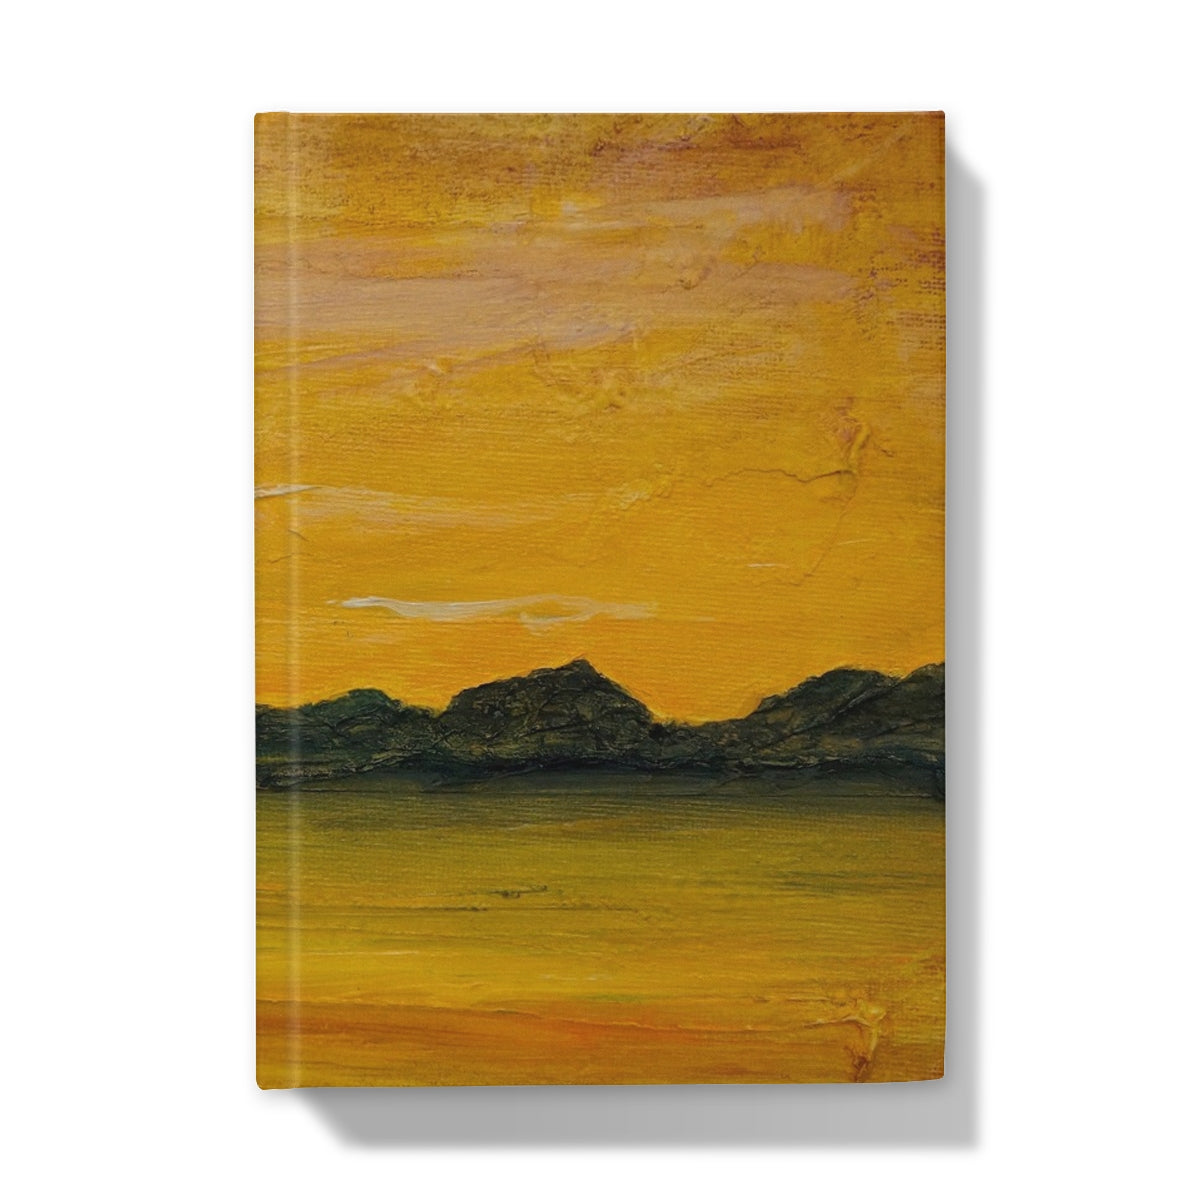 Jura Sunset Art Gifts Hardback Journal-Journals & Notebooks-Hebridean Islands Art Gallery-A5-Plain-Paintings, Prints, Homeware, Art Gifts From Scotland By Scottish Artist Kevin Hunter